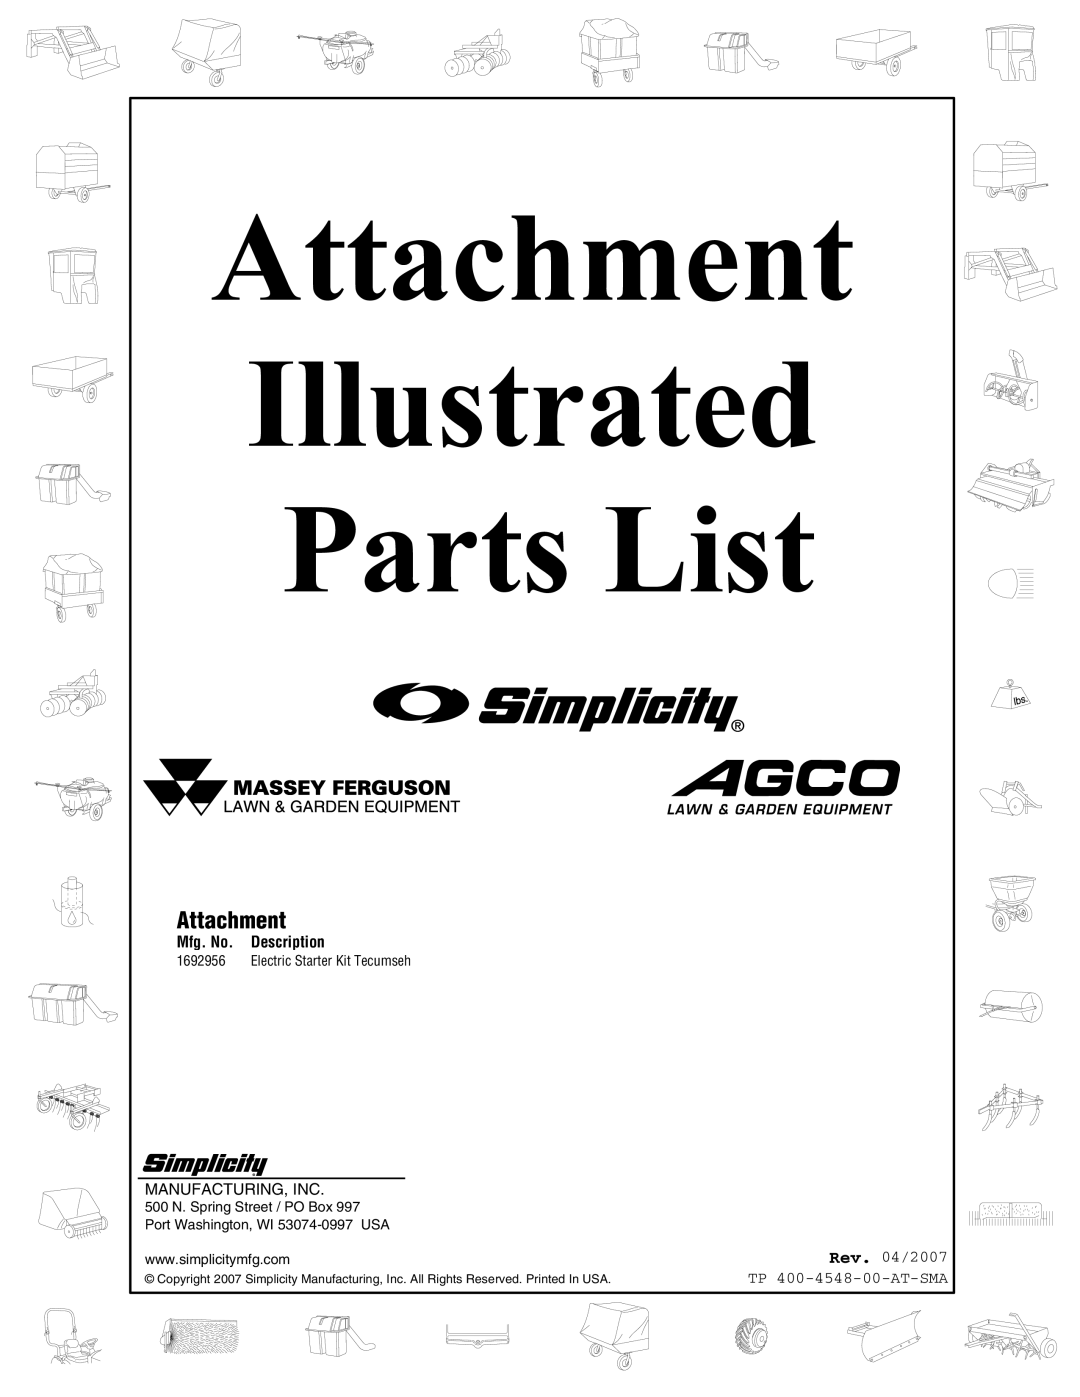 Simplicity Lawn and Garden manual Attachment, Mfg. No. Description, Rev. 04/2007, TP 400-4548-00-AT-SMA, Illustrated 